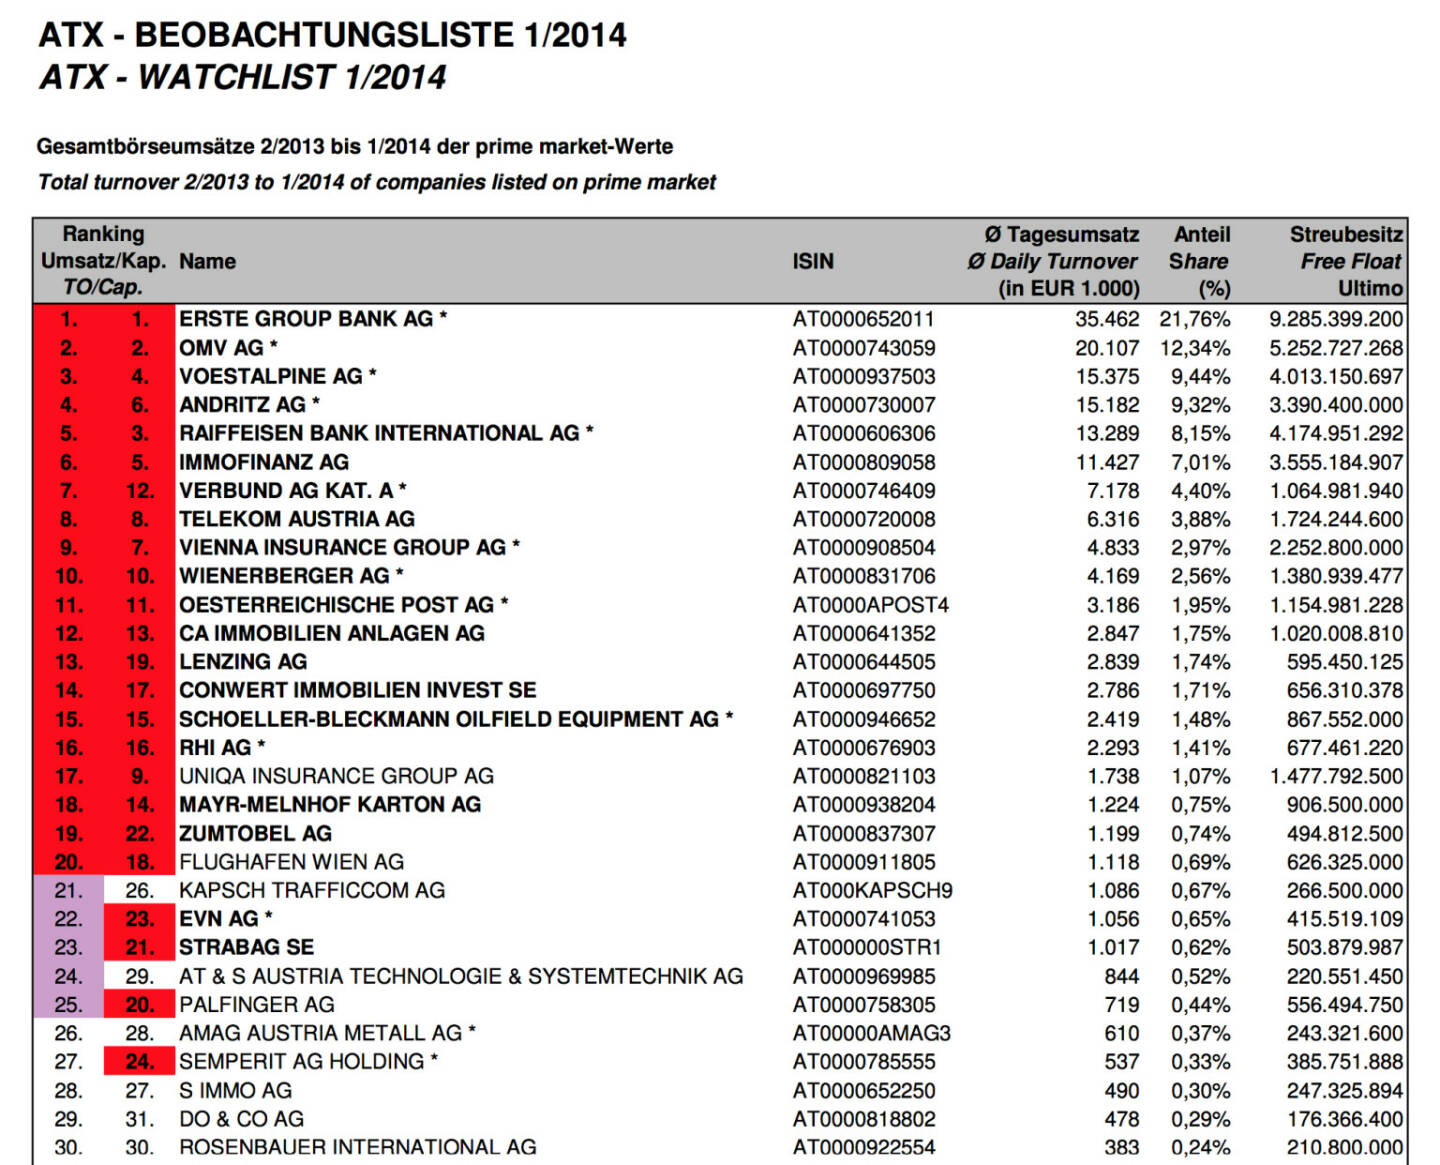 ATX-Beobachtungsliste 1/2014 (c) Wiener Börse